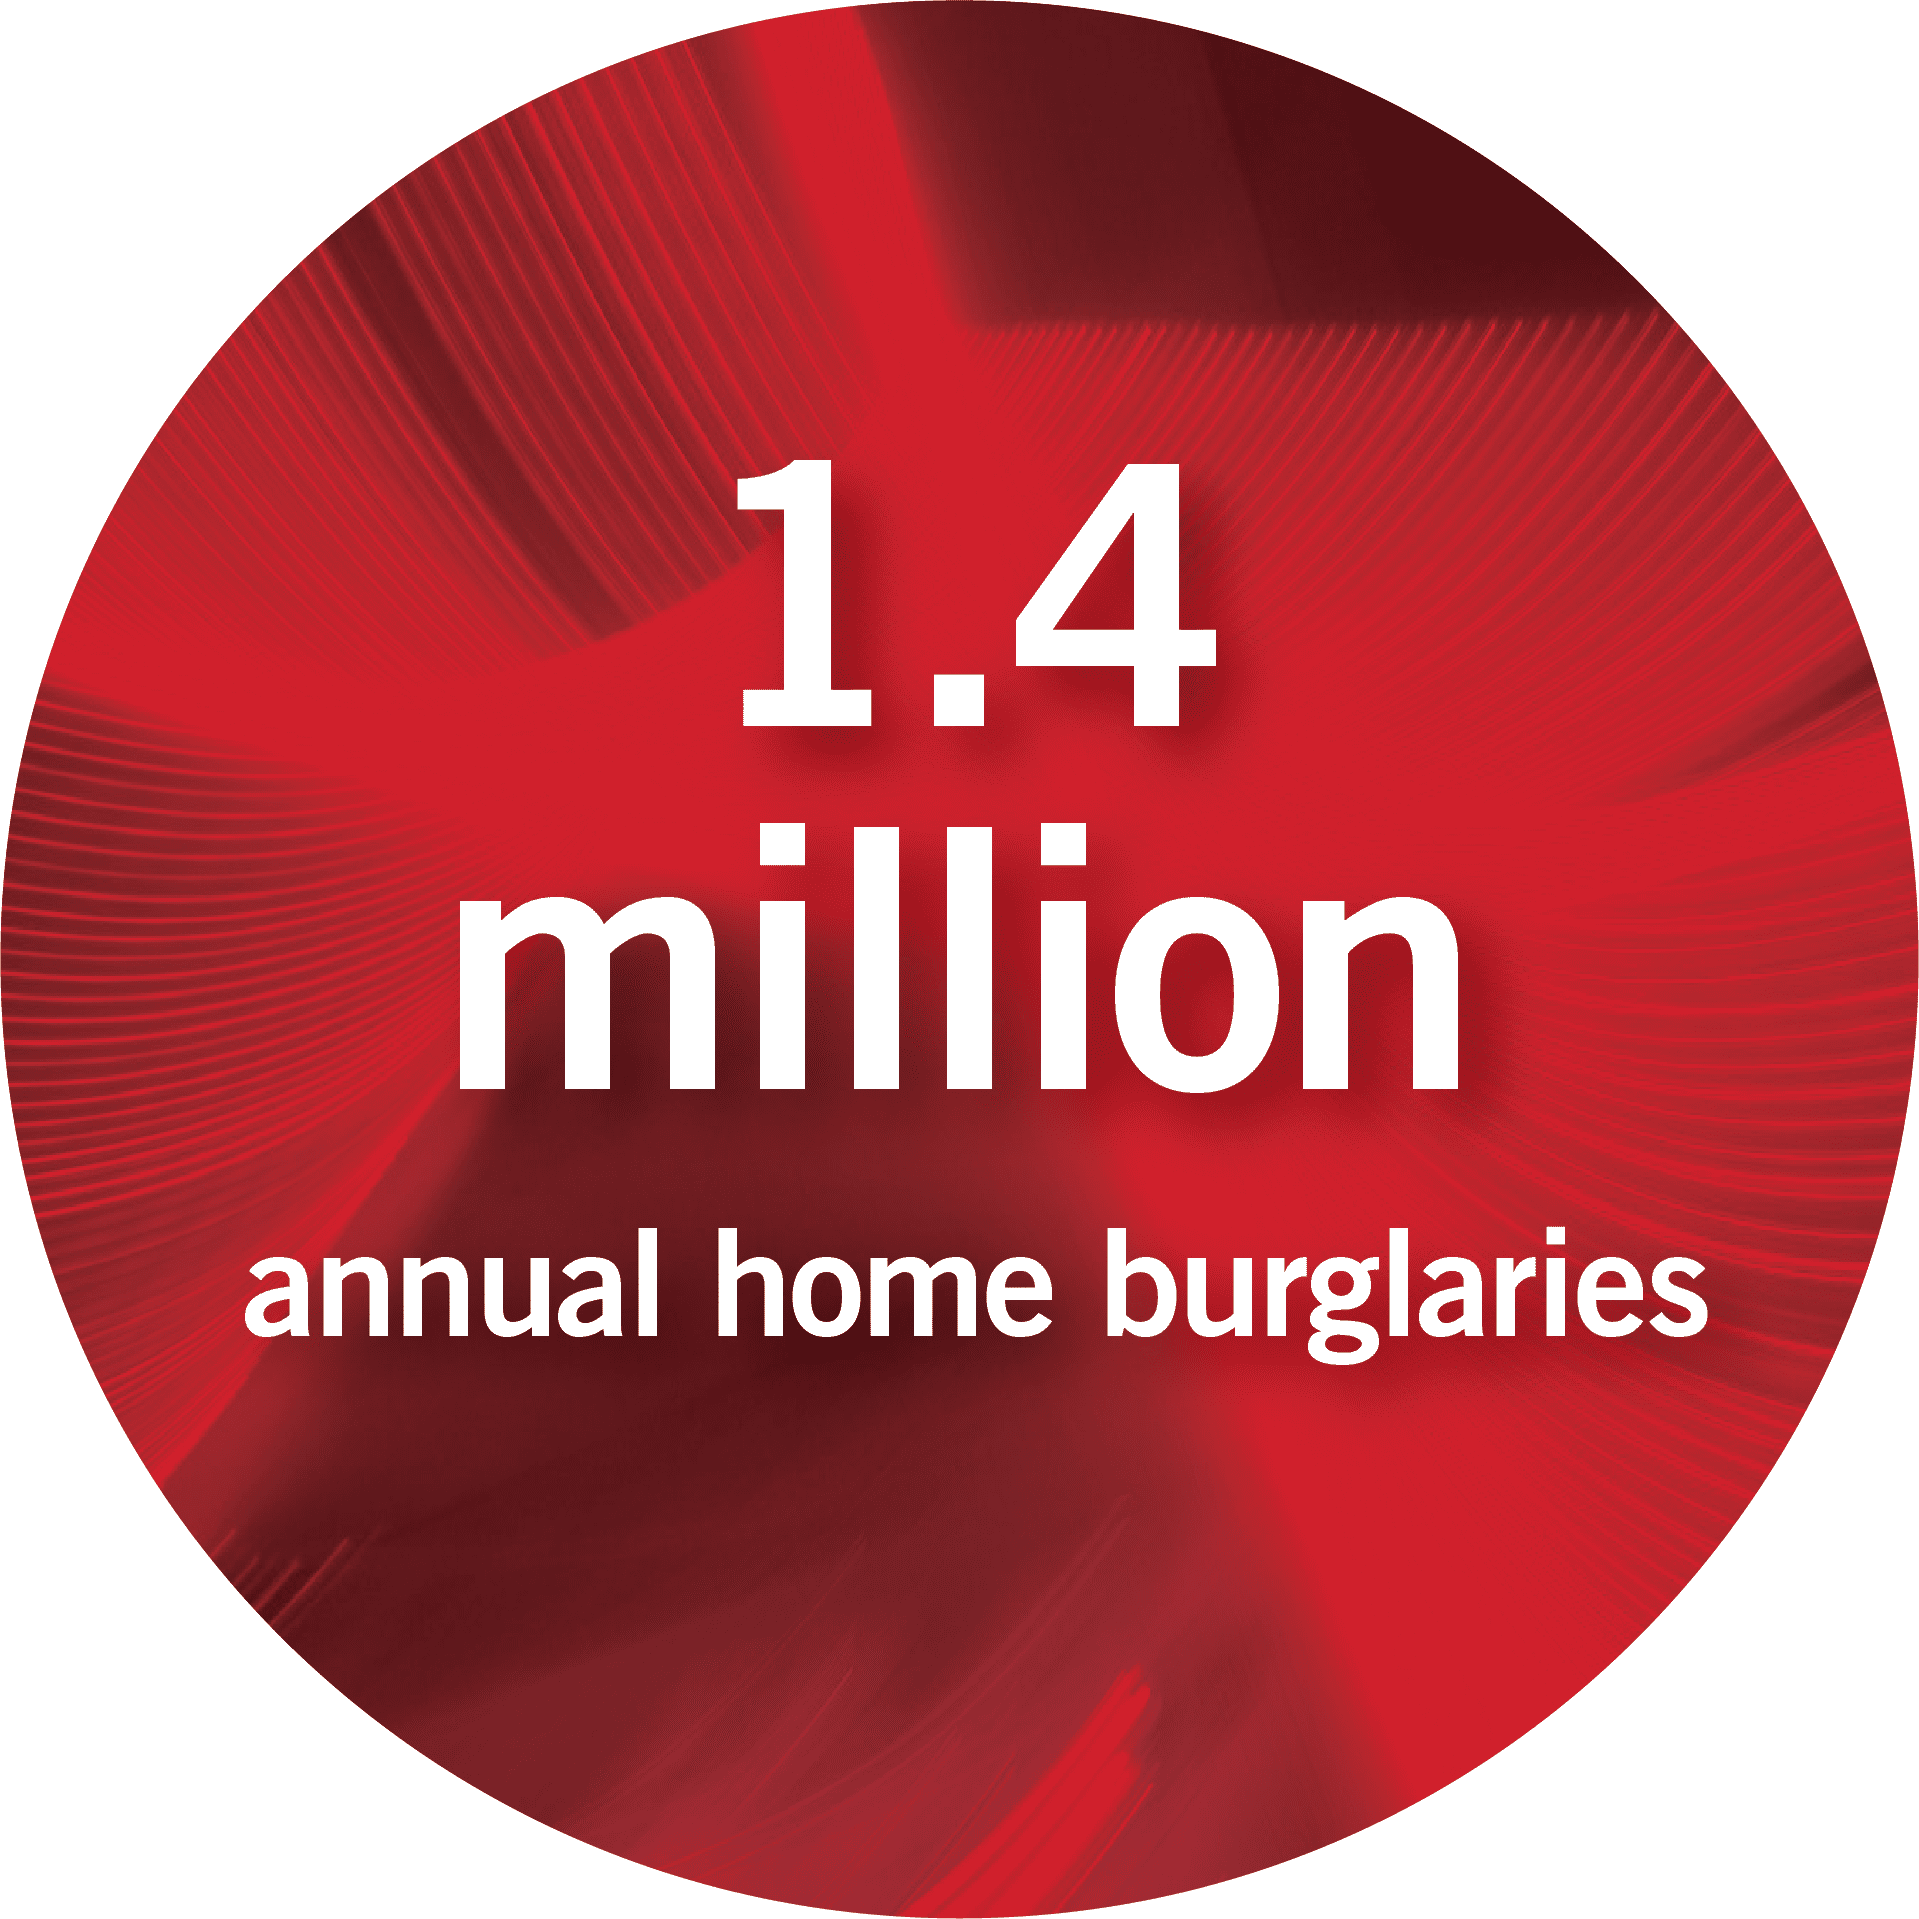 1.4 million annual home burglaries